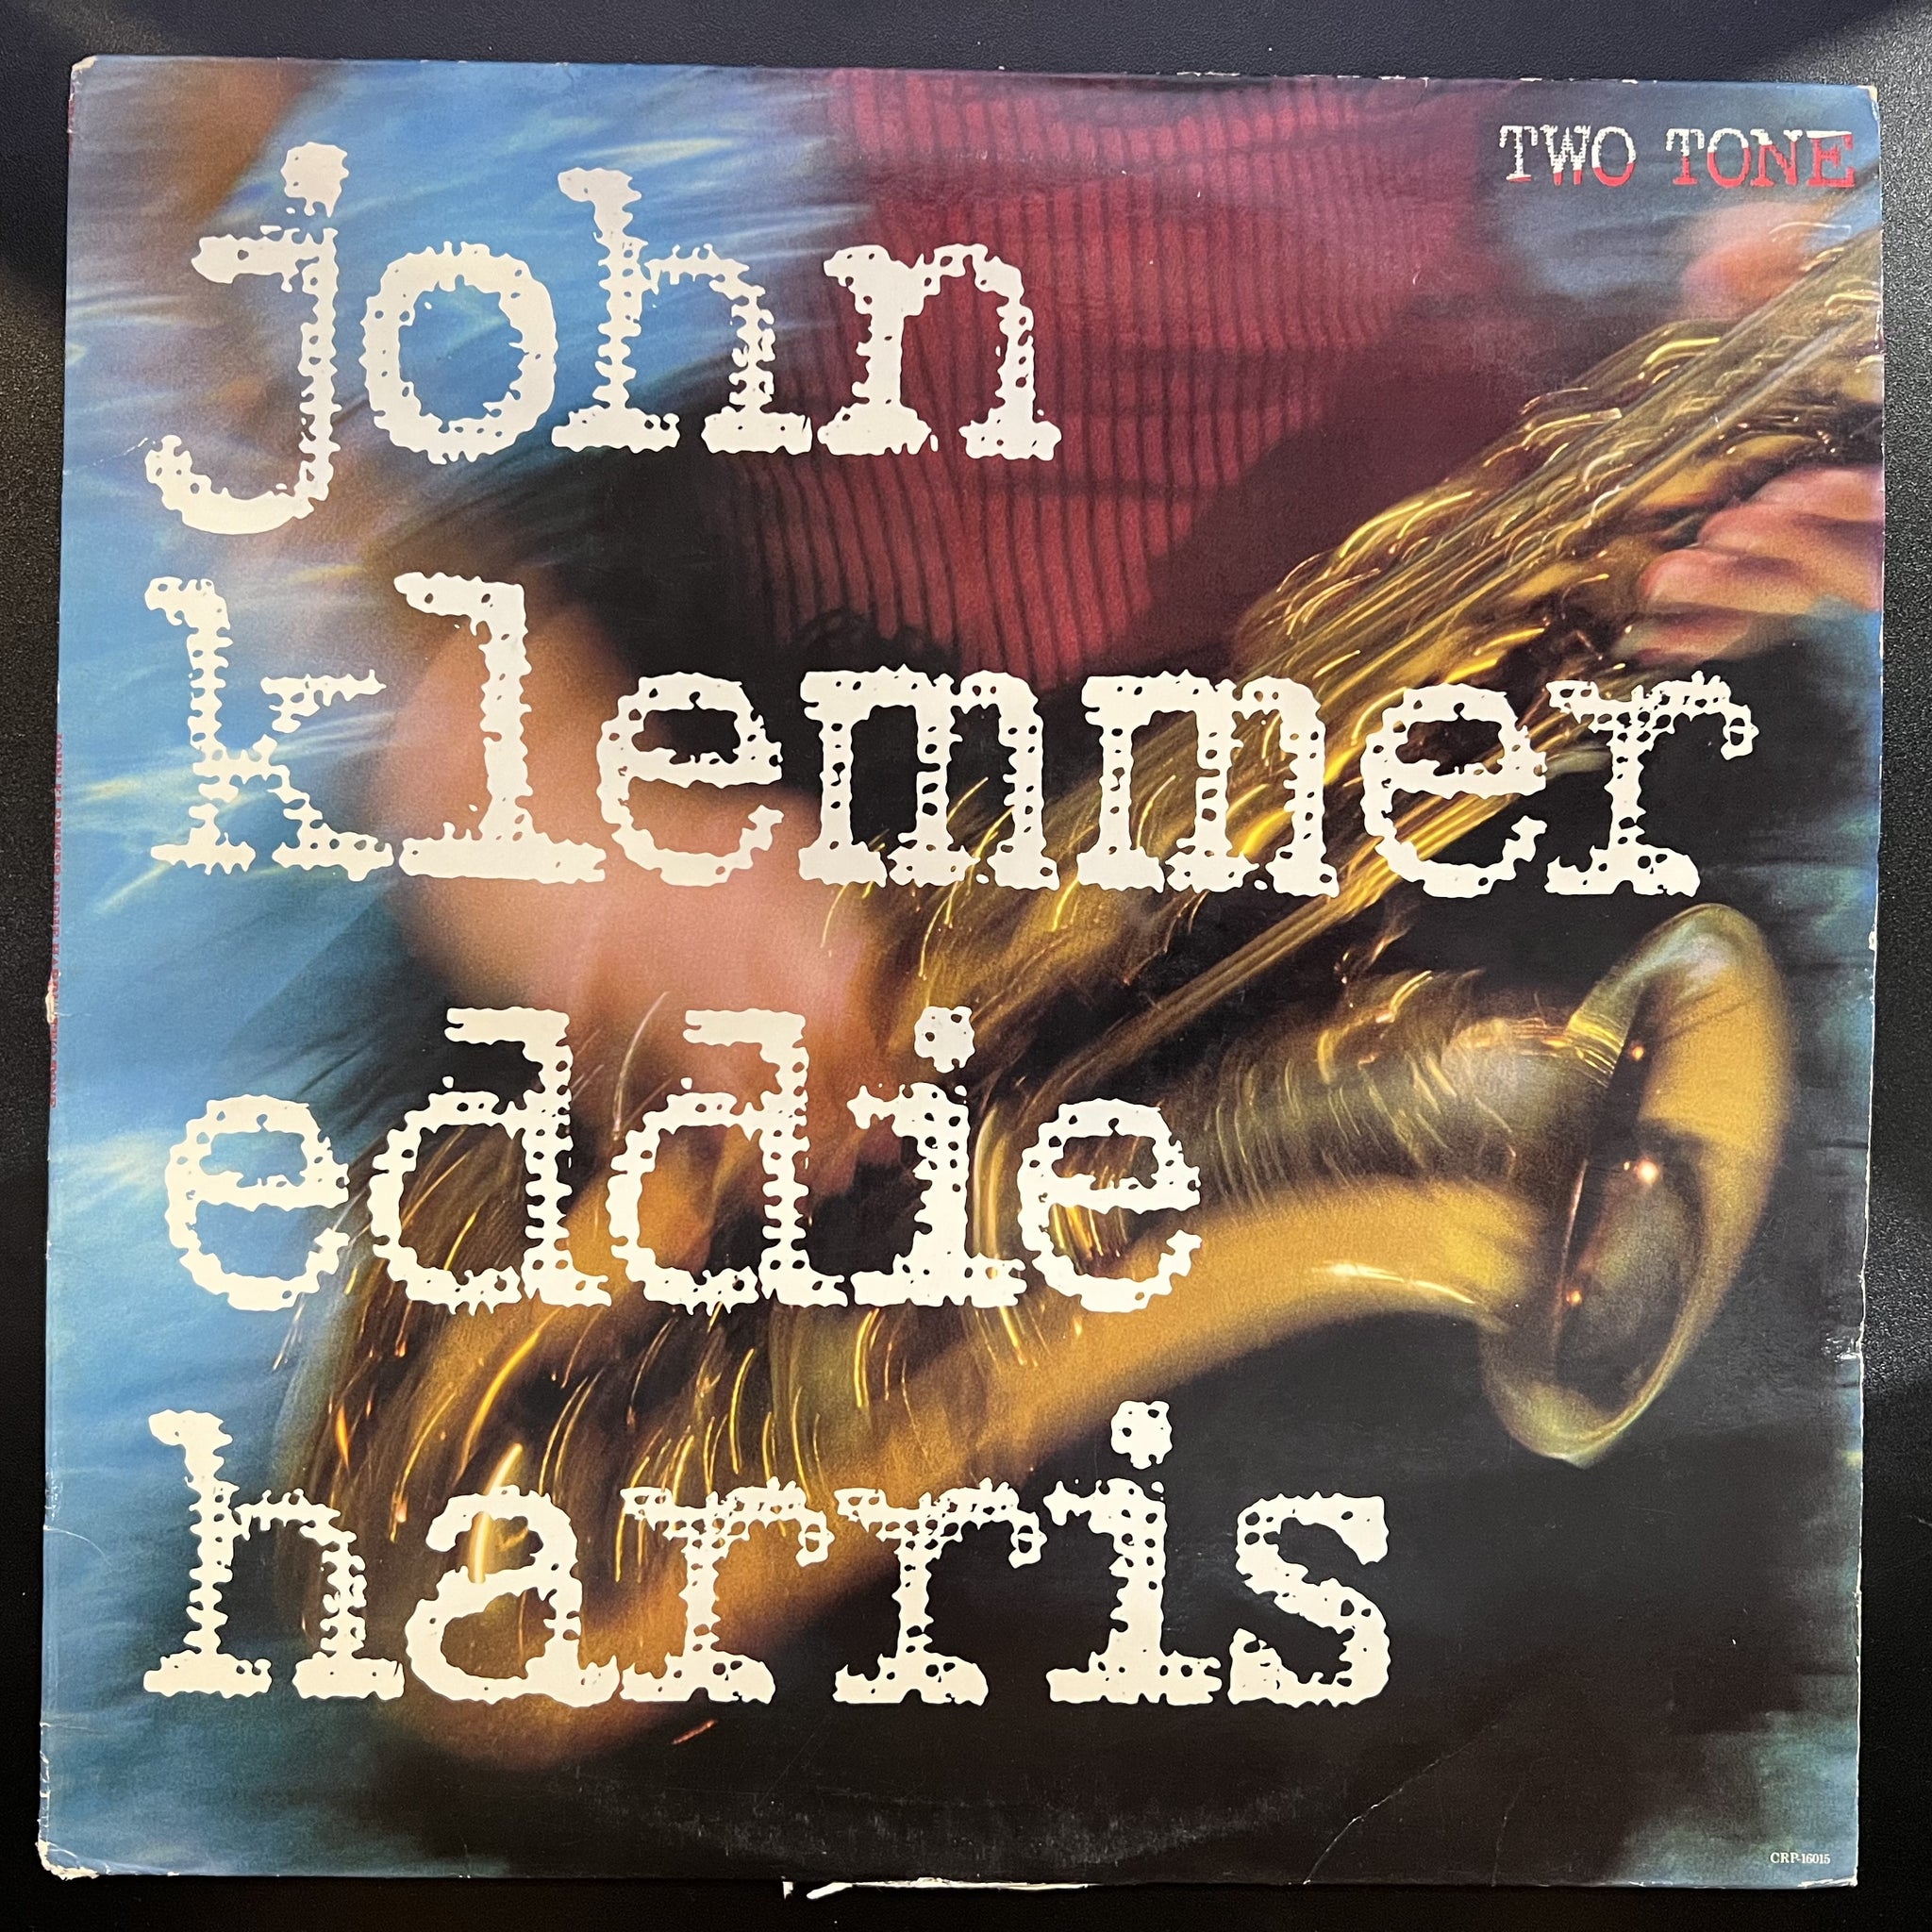 John Klemmer / Eddie Harris – Two Tone - Mint- LP Record 1982 Crusaders USA Vinyl - Fusion / Jazz-Funk / Smooth Jazz